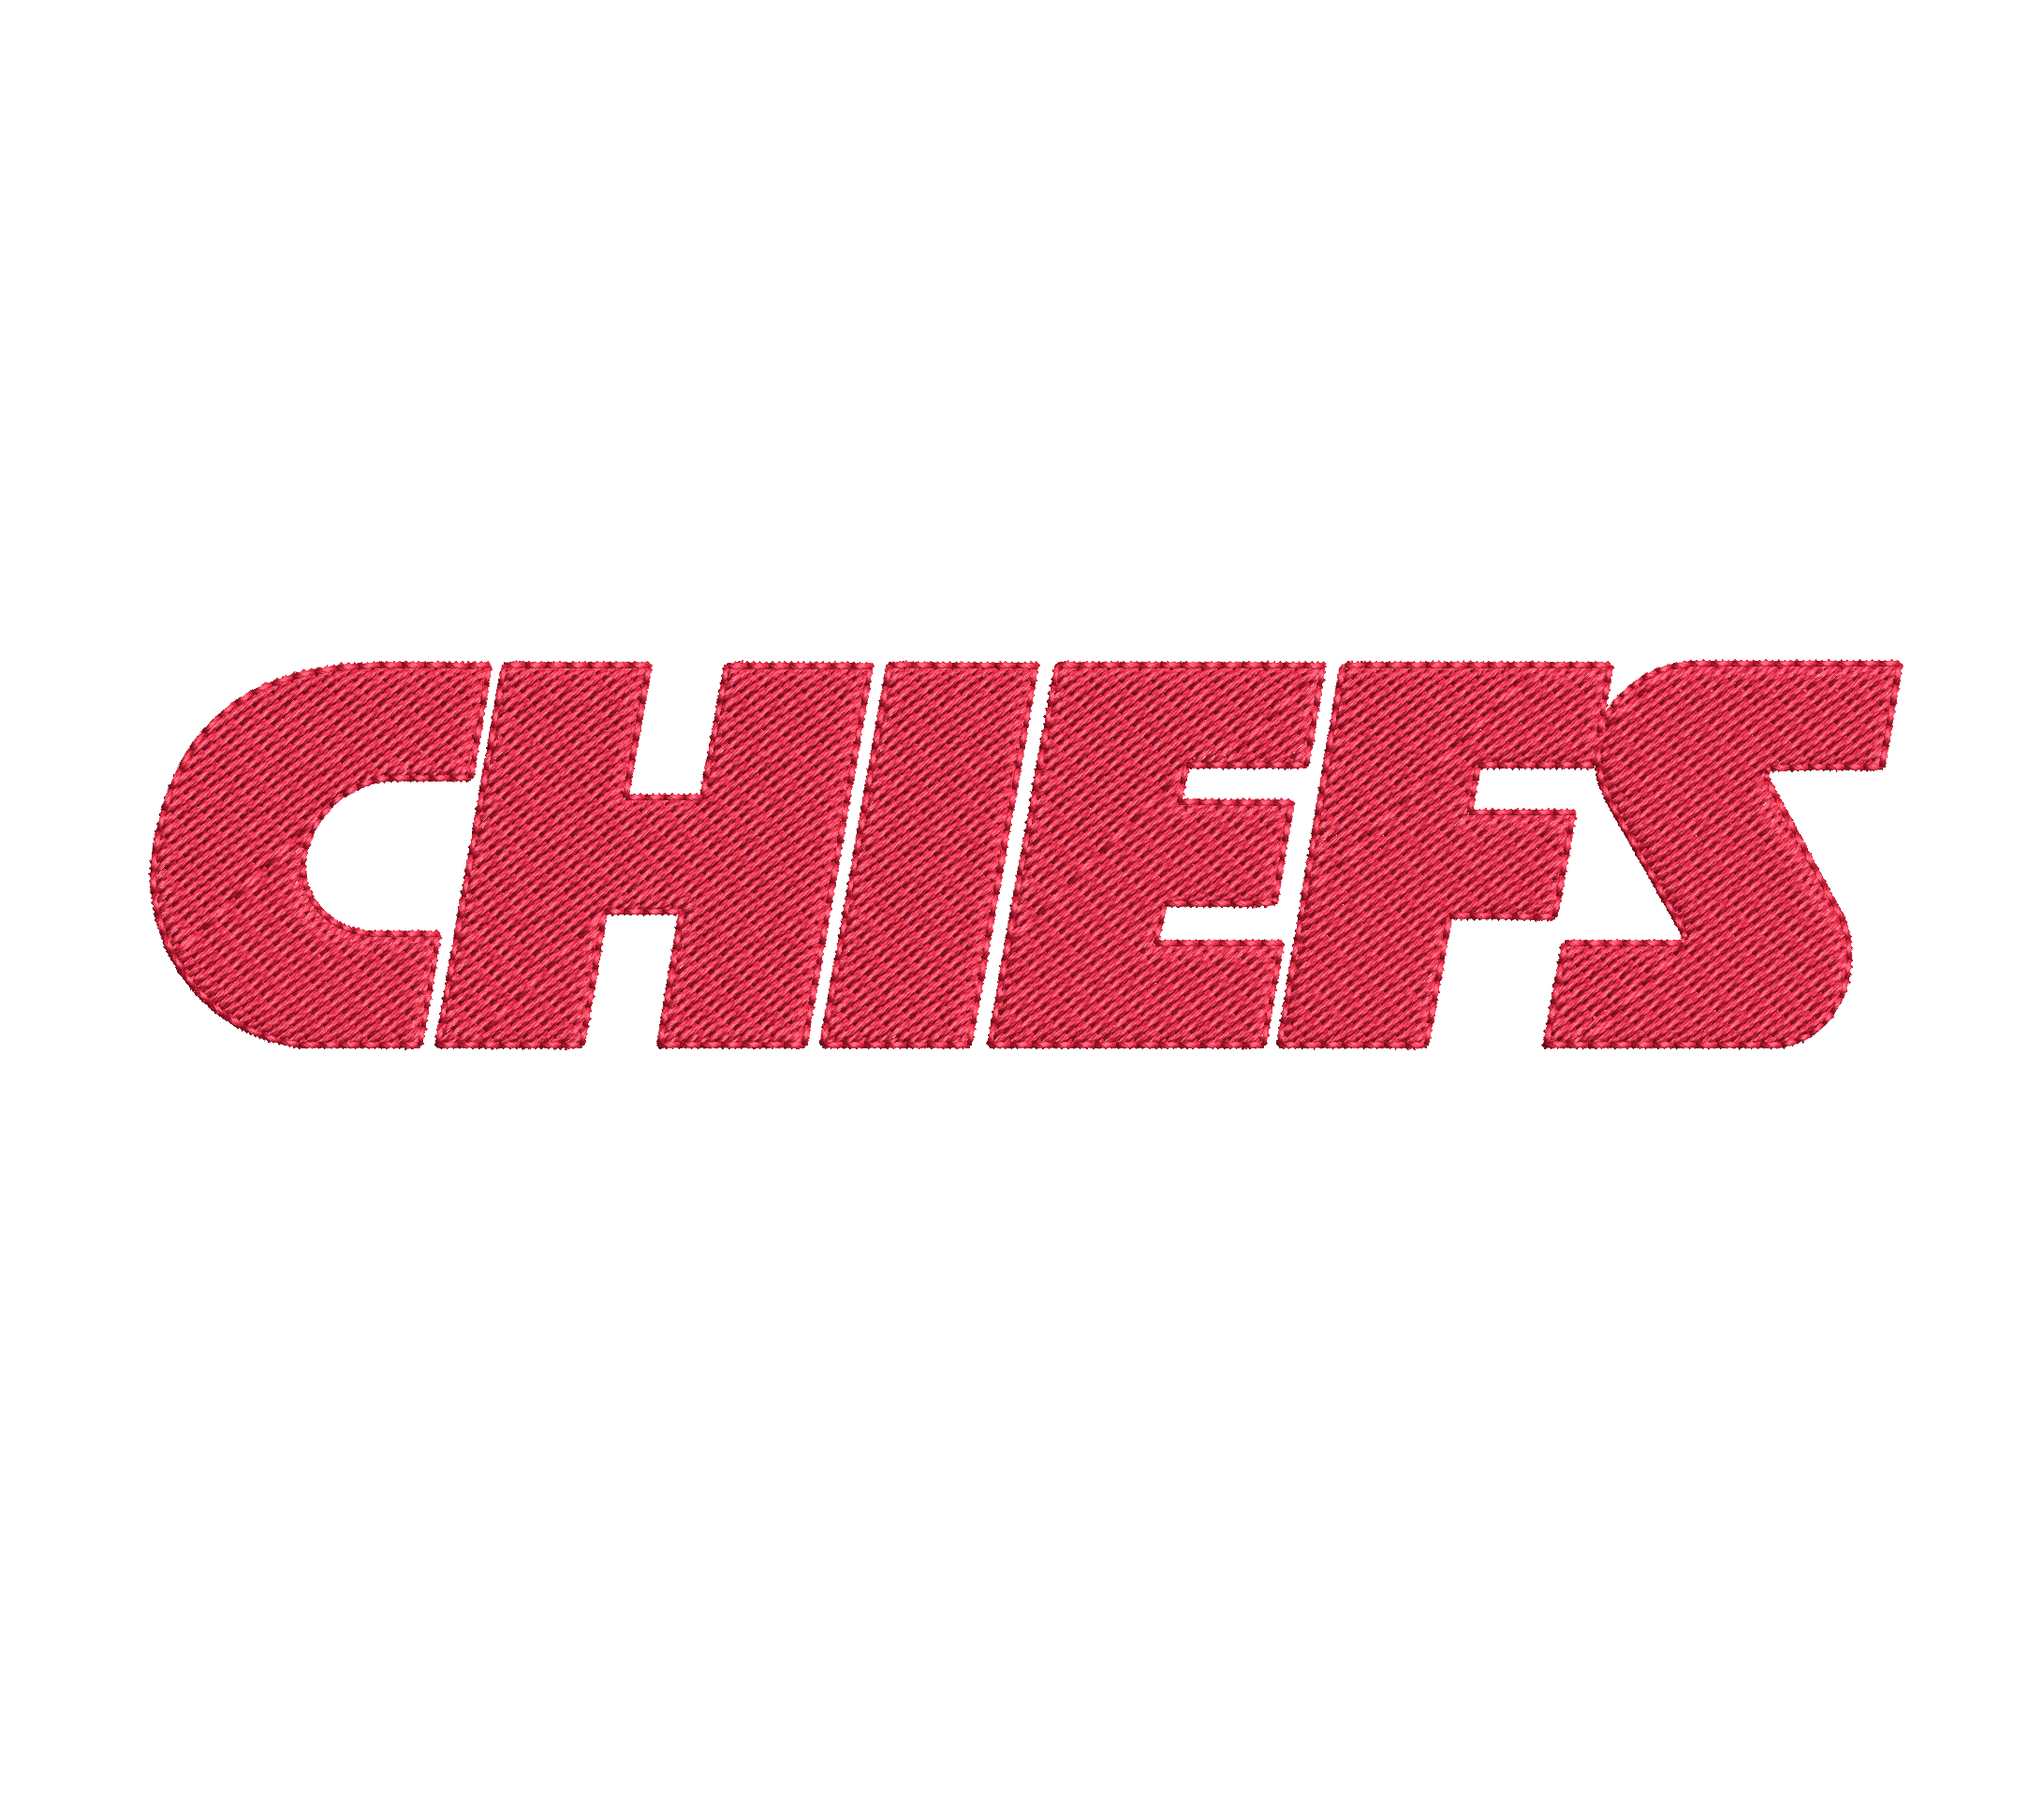 Kansas City Chiefs 6 : Embroidery Design